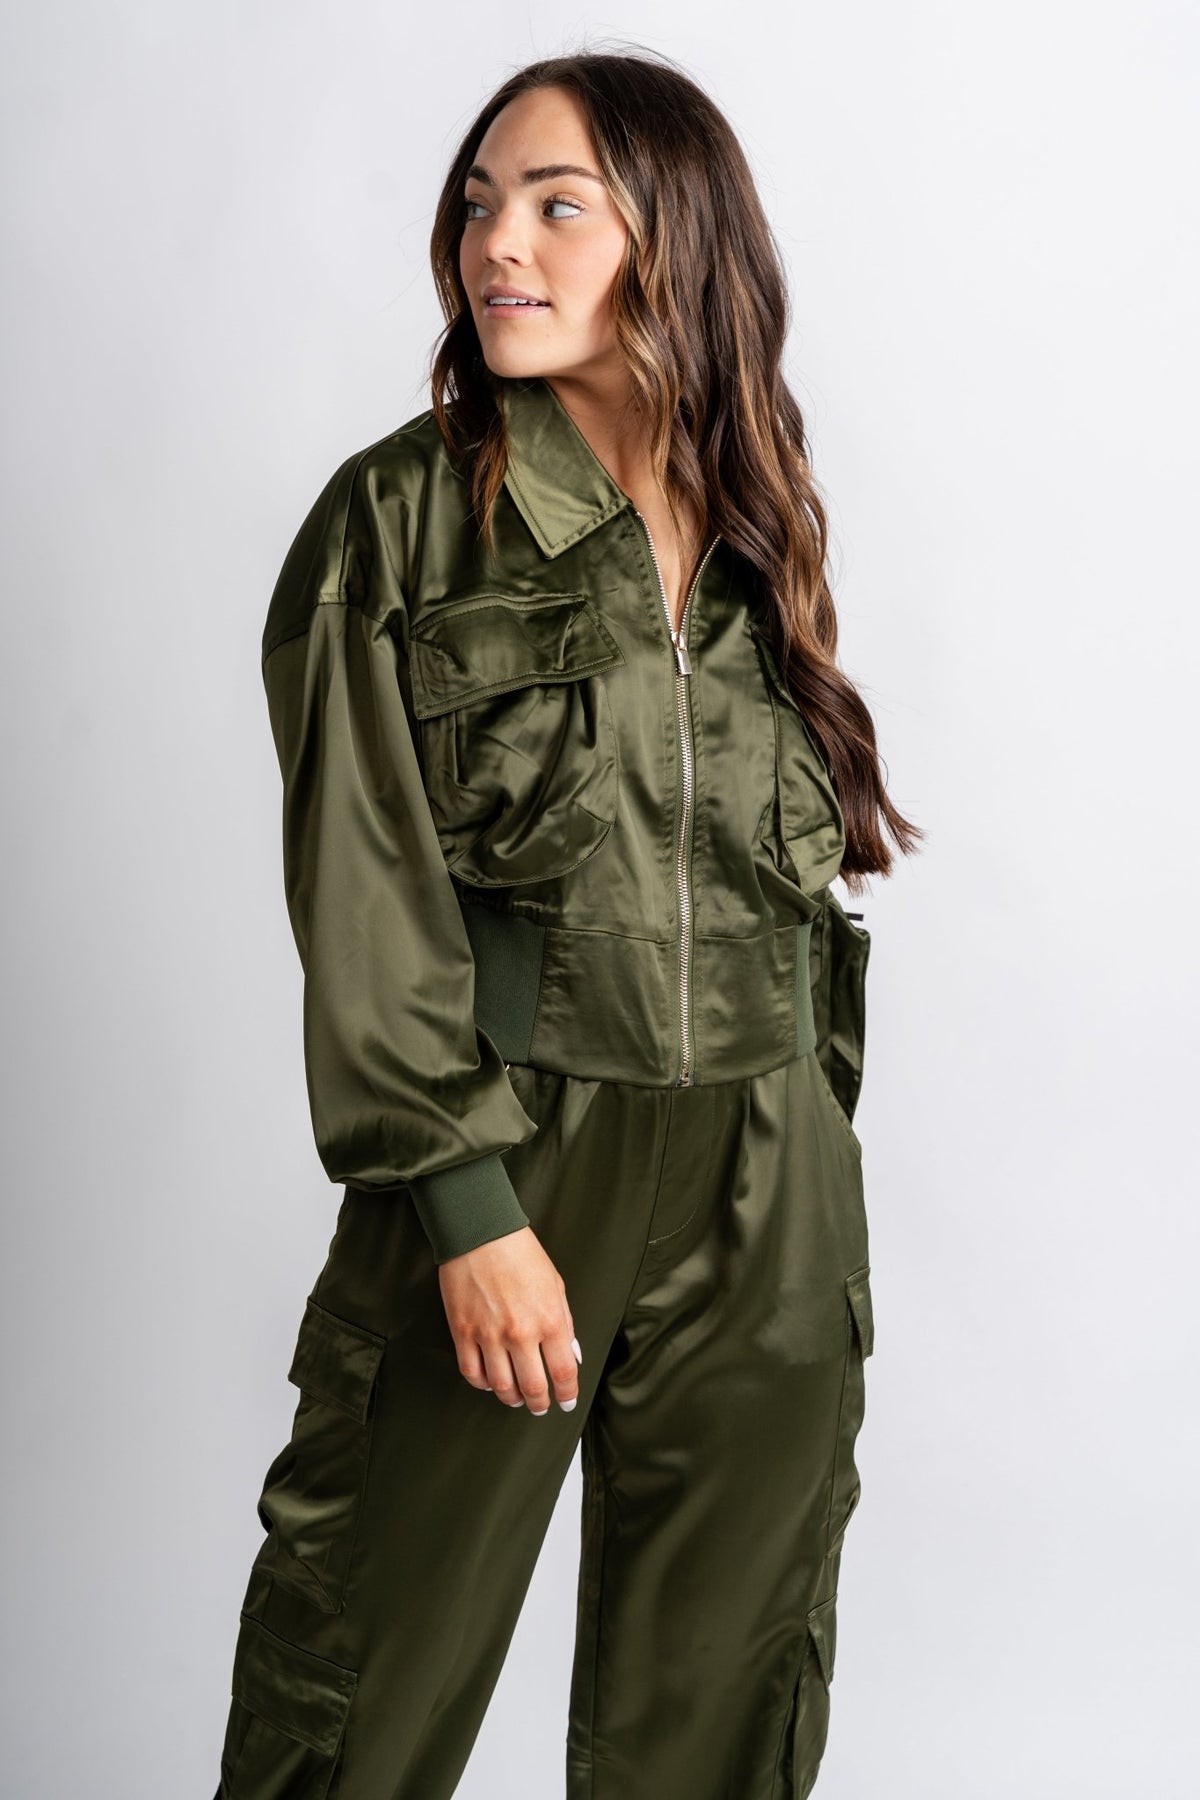 Satin cargo jacket olive – Trendy Jackets | Cute Fashion Blazers at Lush Fashion Lounge Boutique in Oklahoma City